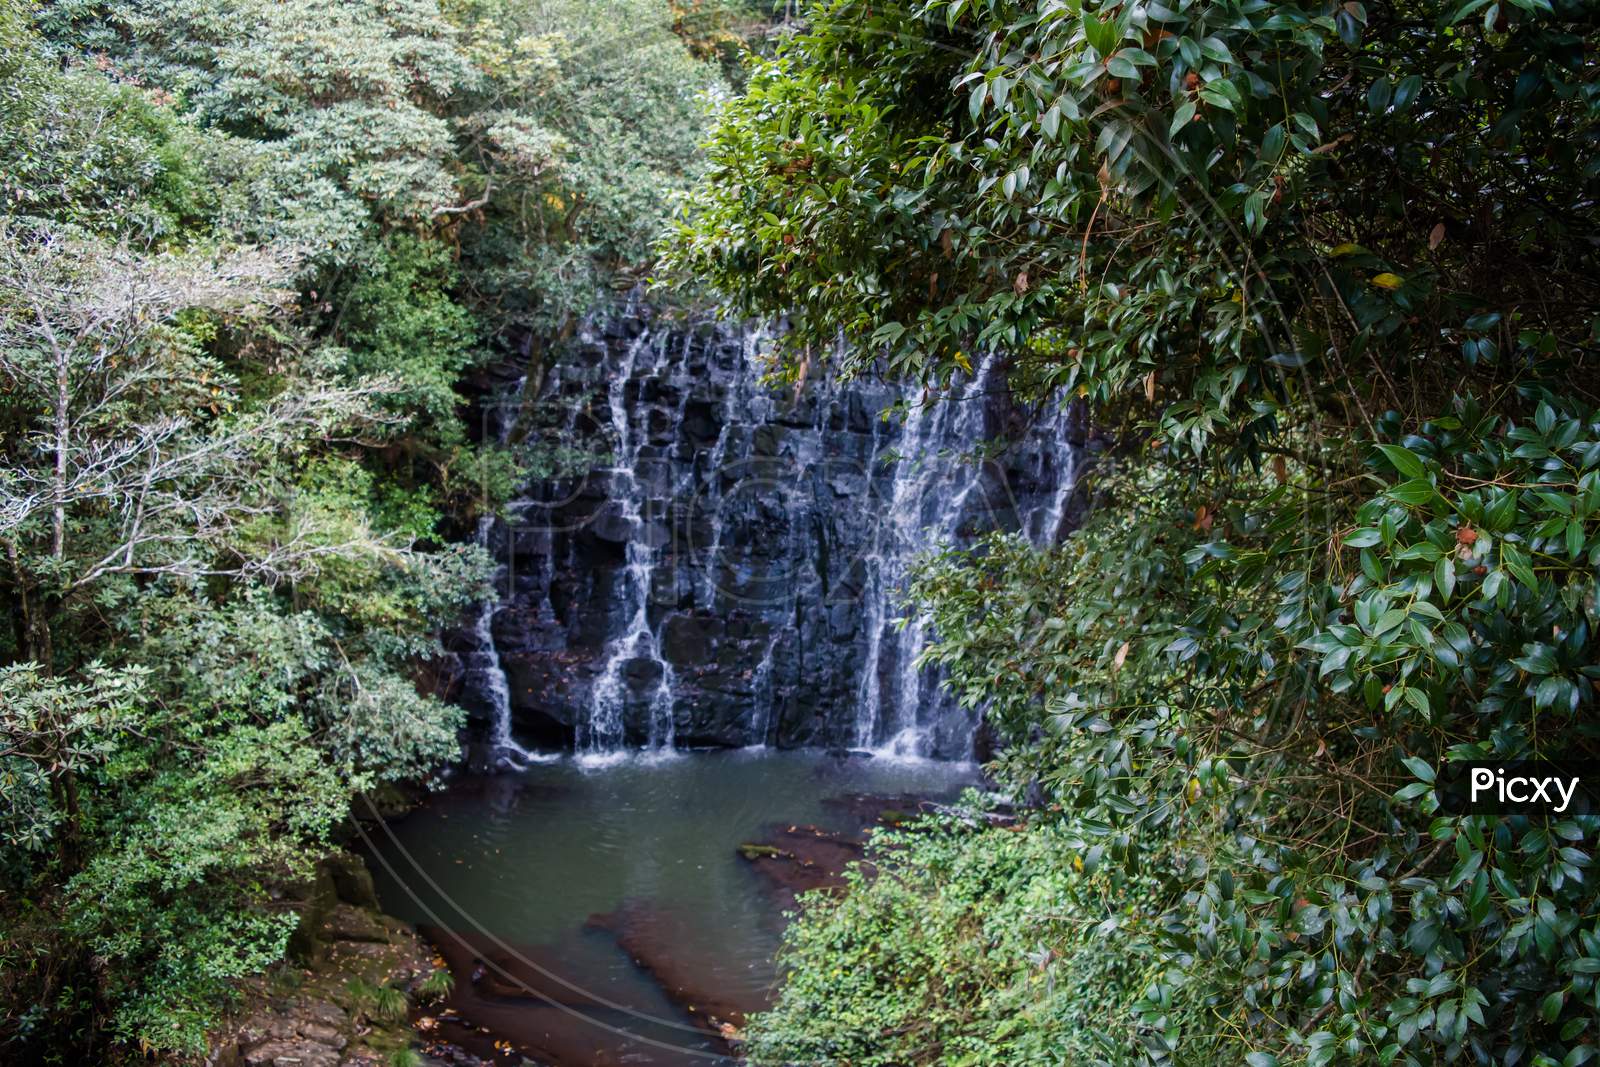 File:1st fall of the Elephant falls, Shillong.jpg - Wikipedia